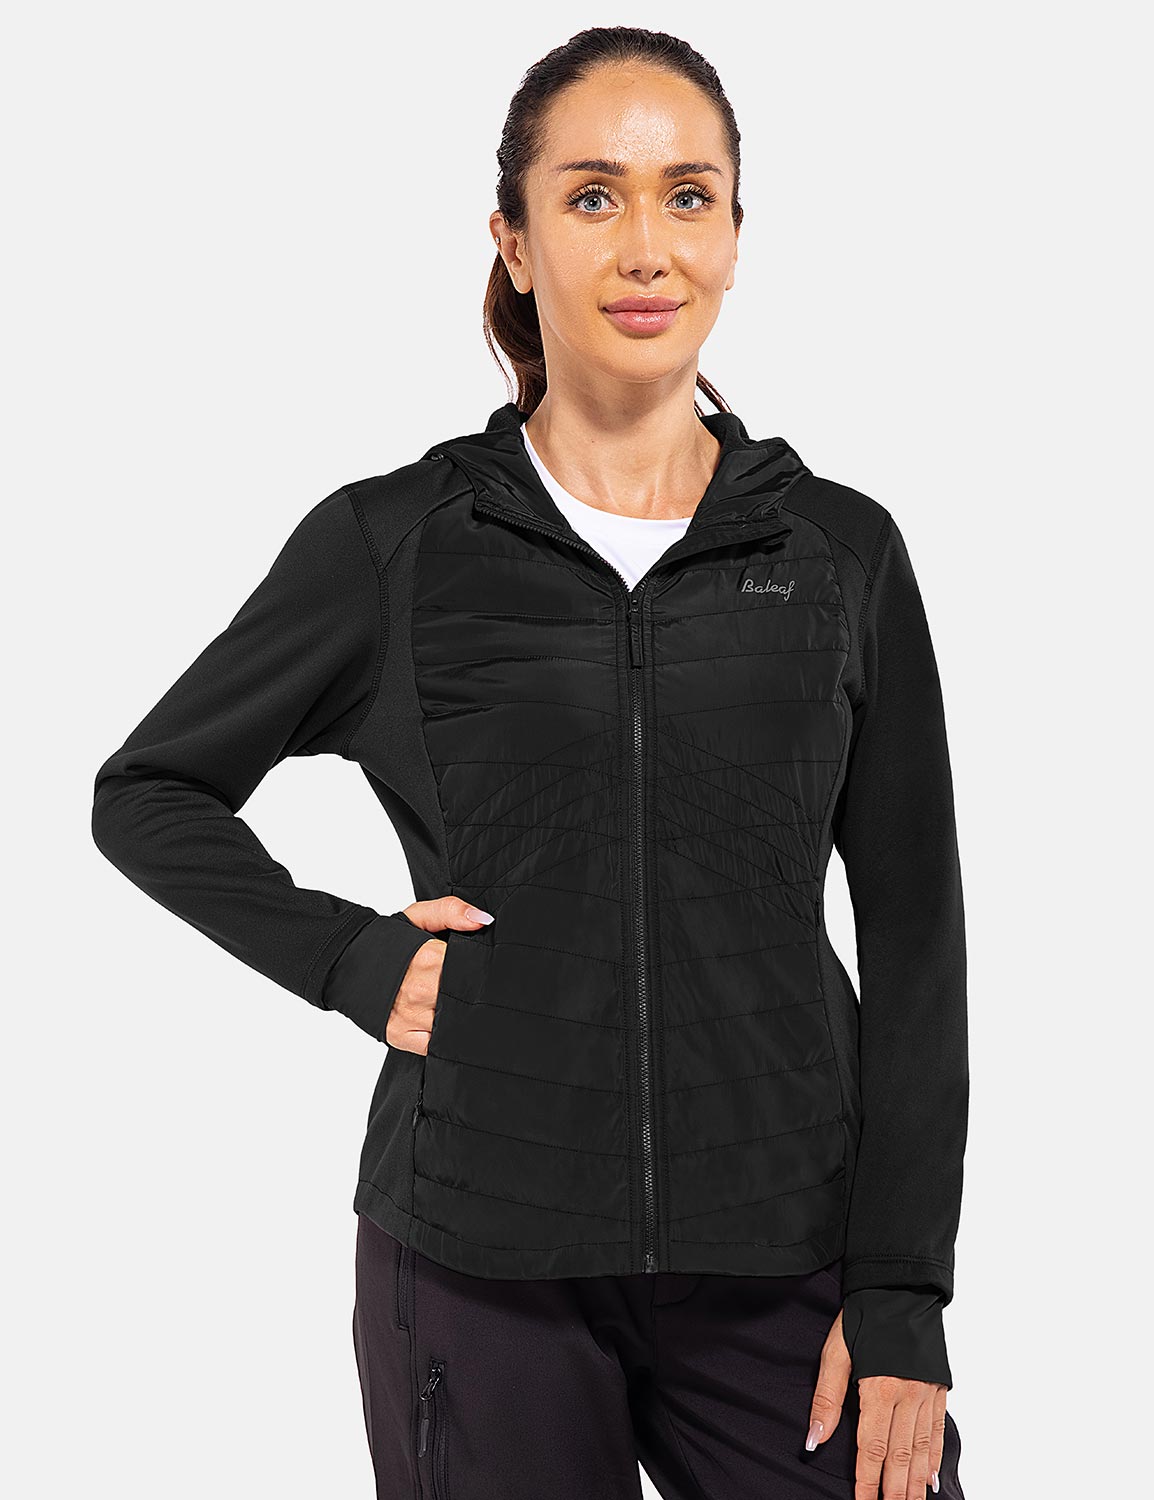 Baleaf Women's Triumph Thermal Water-Resistant Hooded Jacket cga030 Black Front